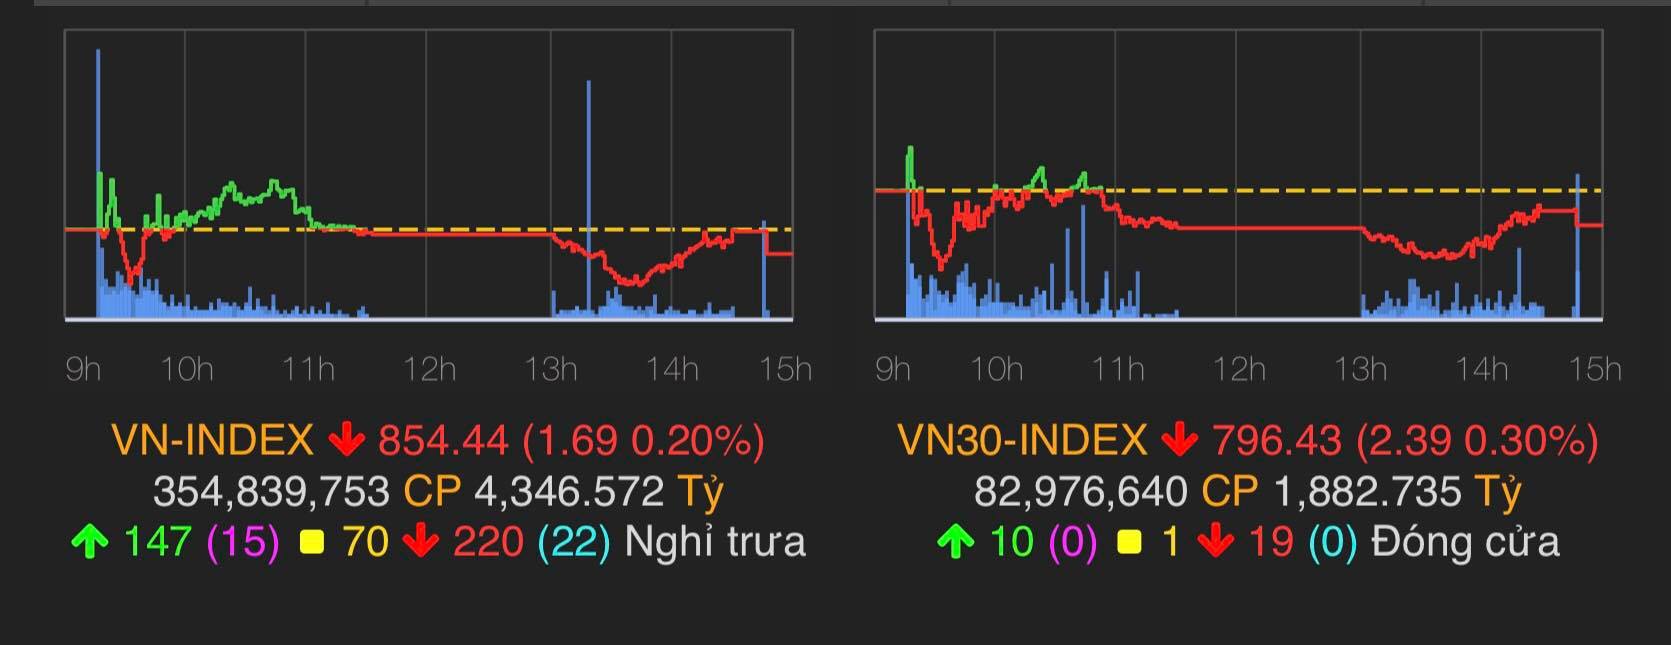 VN-Index giảm 1,69 điểm (0,2%) xuống 854,44 điểm.